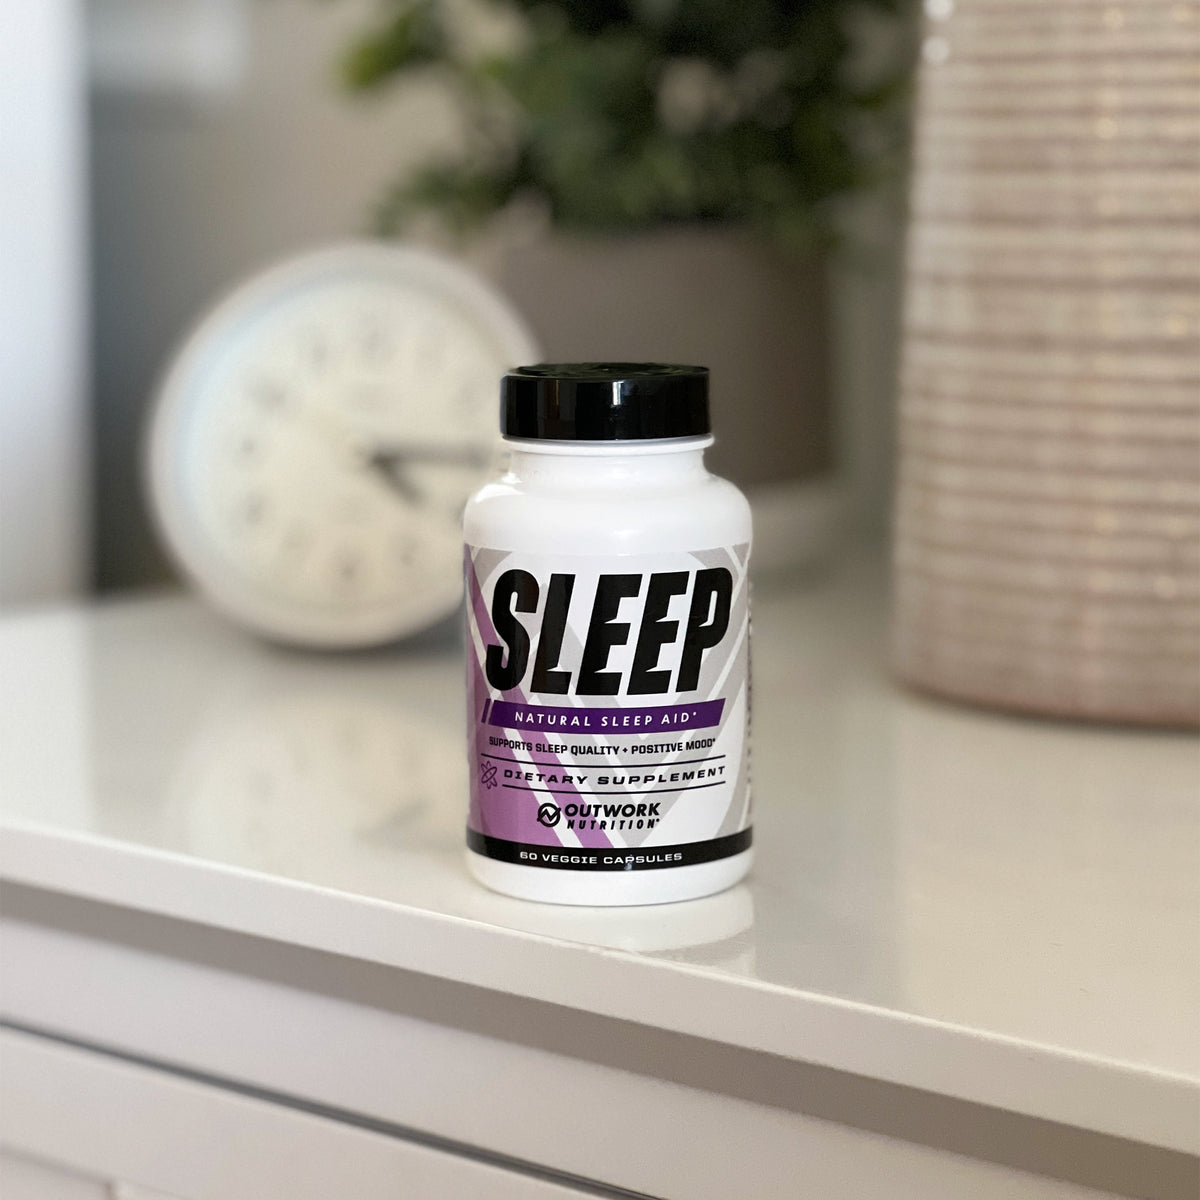 natural sleep aid bottle